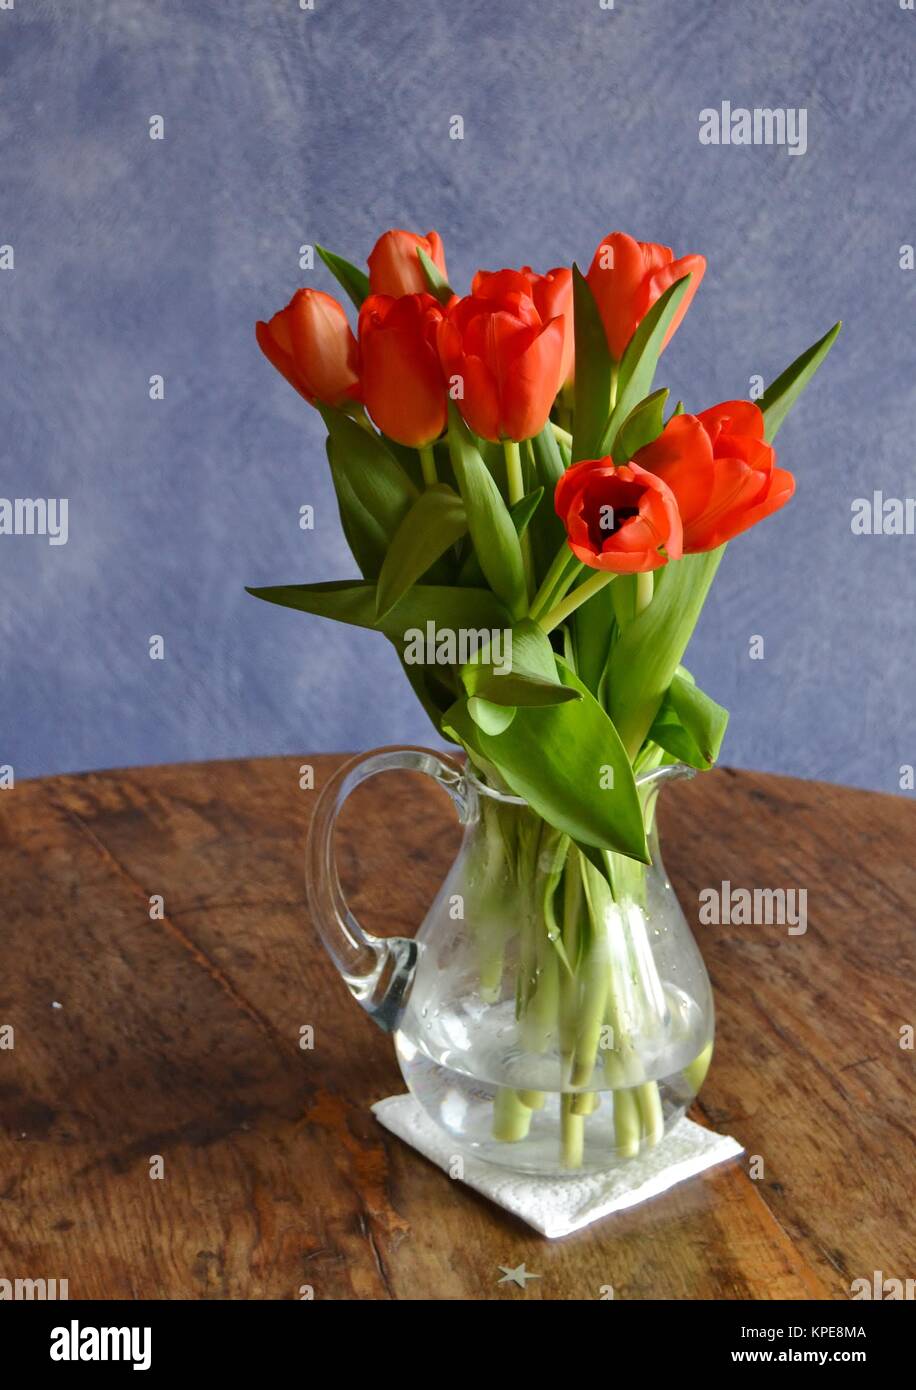 tulips in glass jug Stock Photo - Alamy